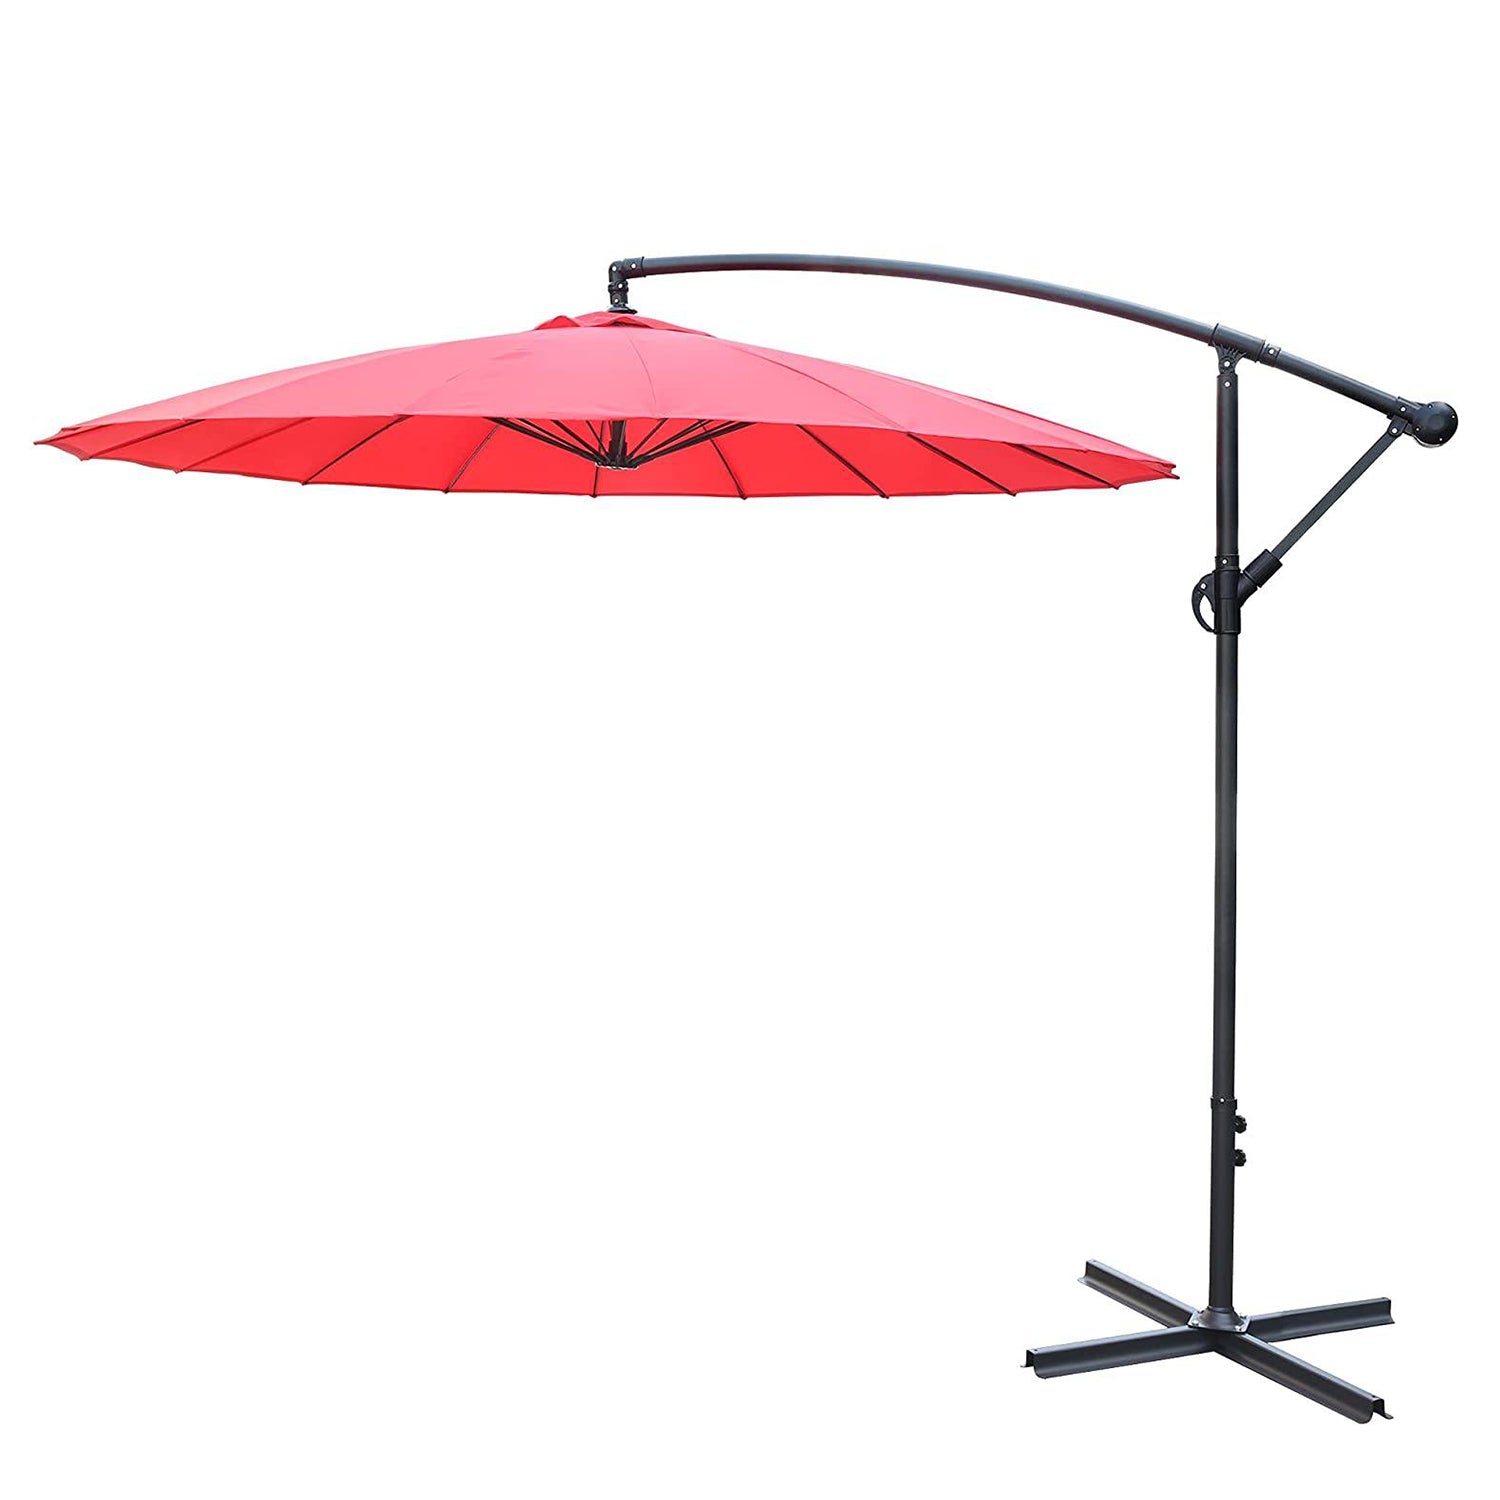 Offset Hanging Market Patio Umbrella w/Easy Tilt Adjustment for Backyard, Poolside, Lawn and Garden, Red